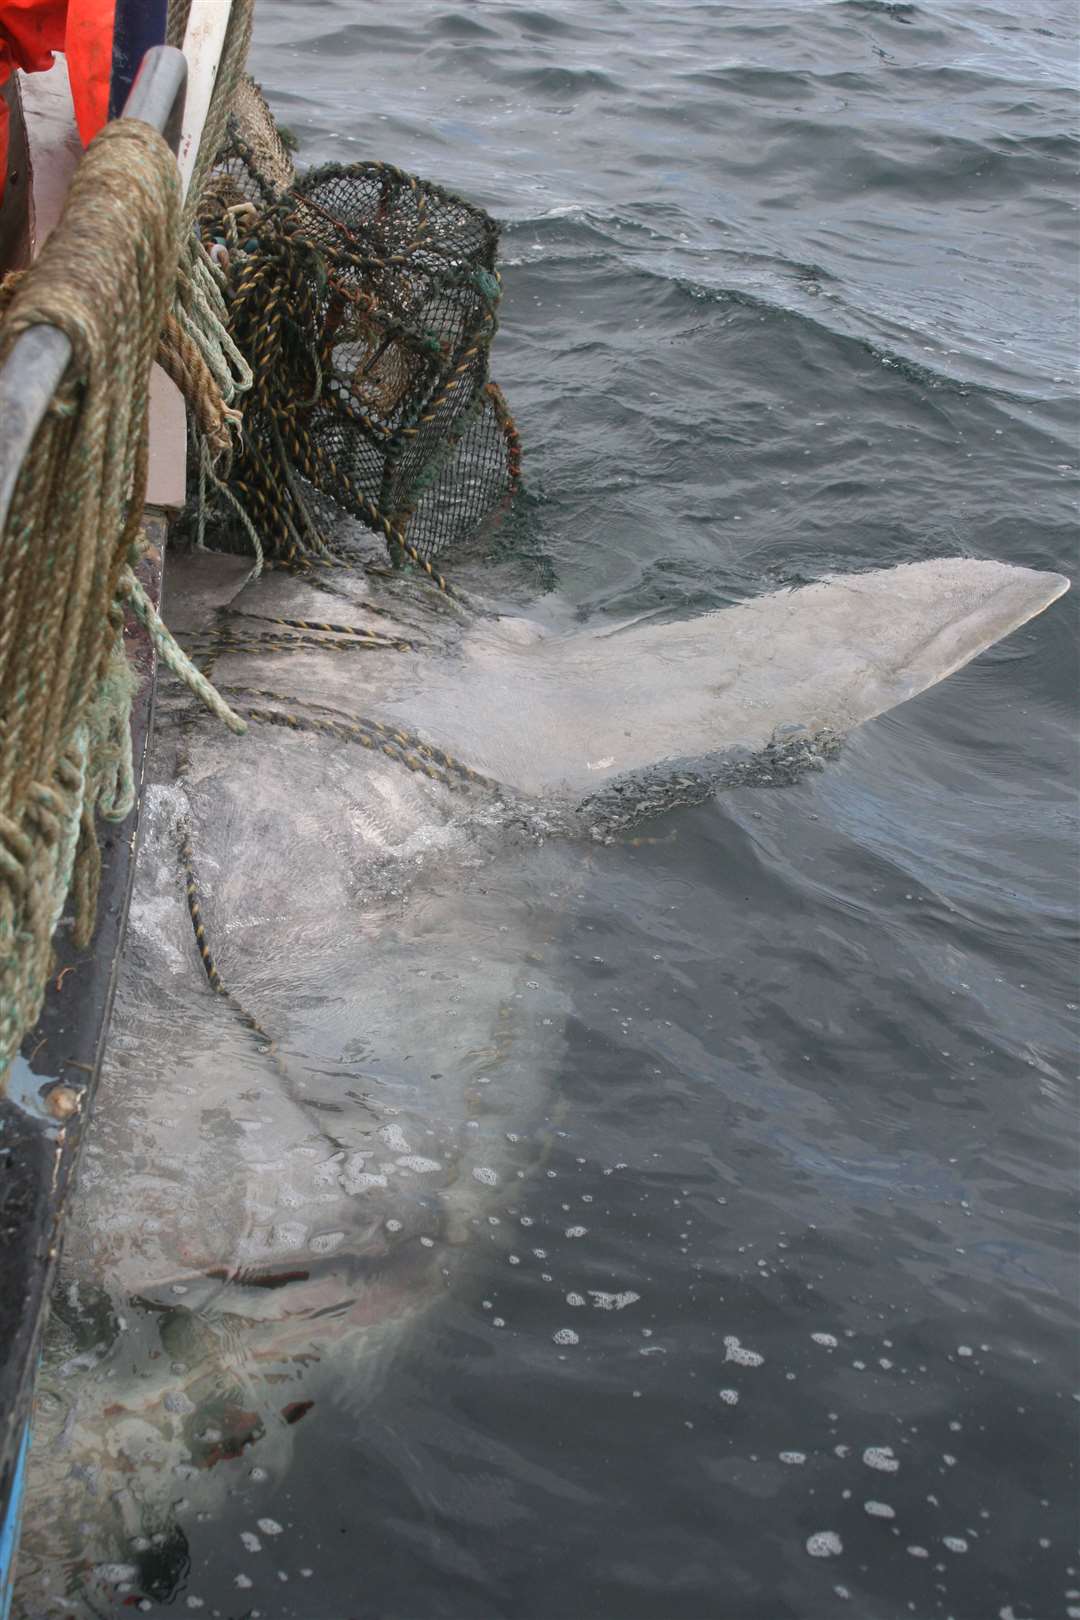 Dead basking shark being released from entanglement.